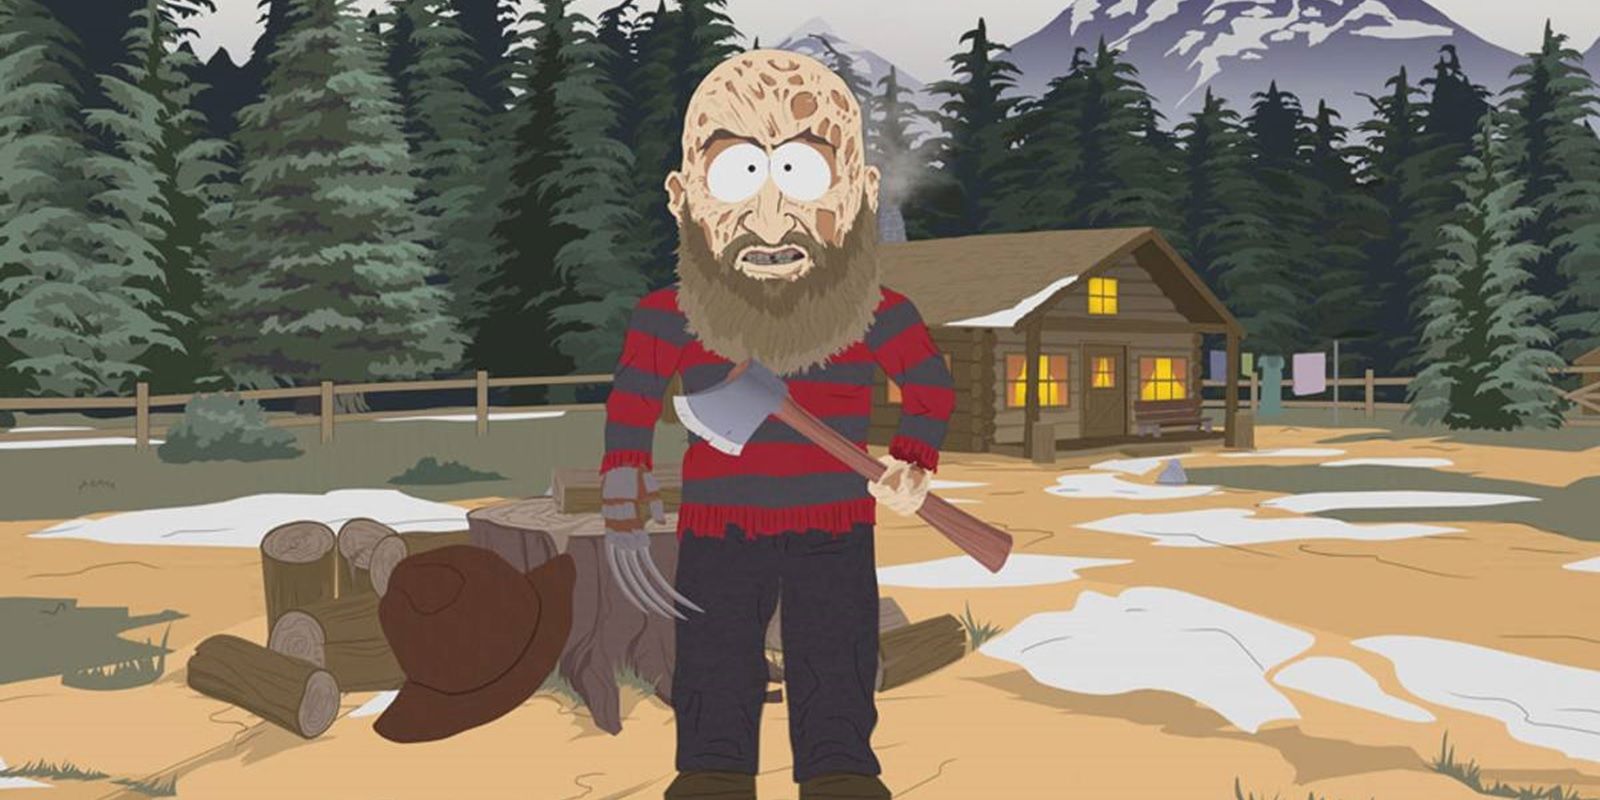 Freddy Krueger chopping wood in South Park